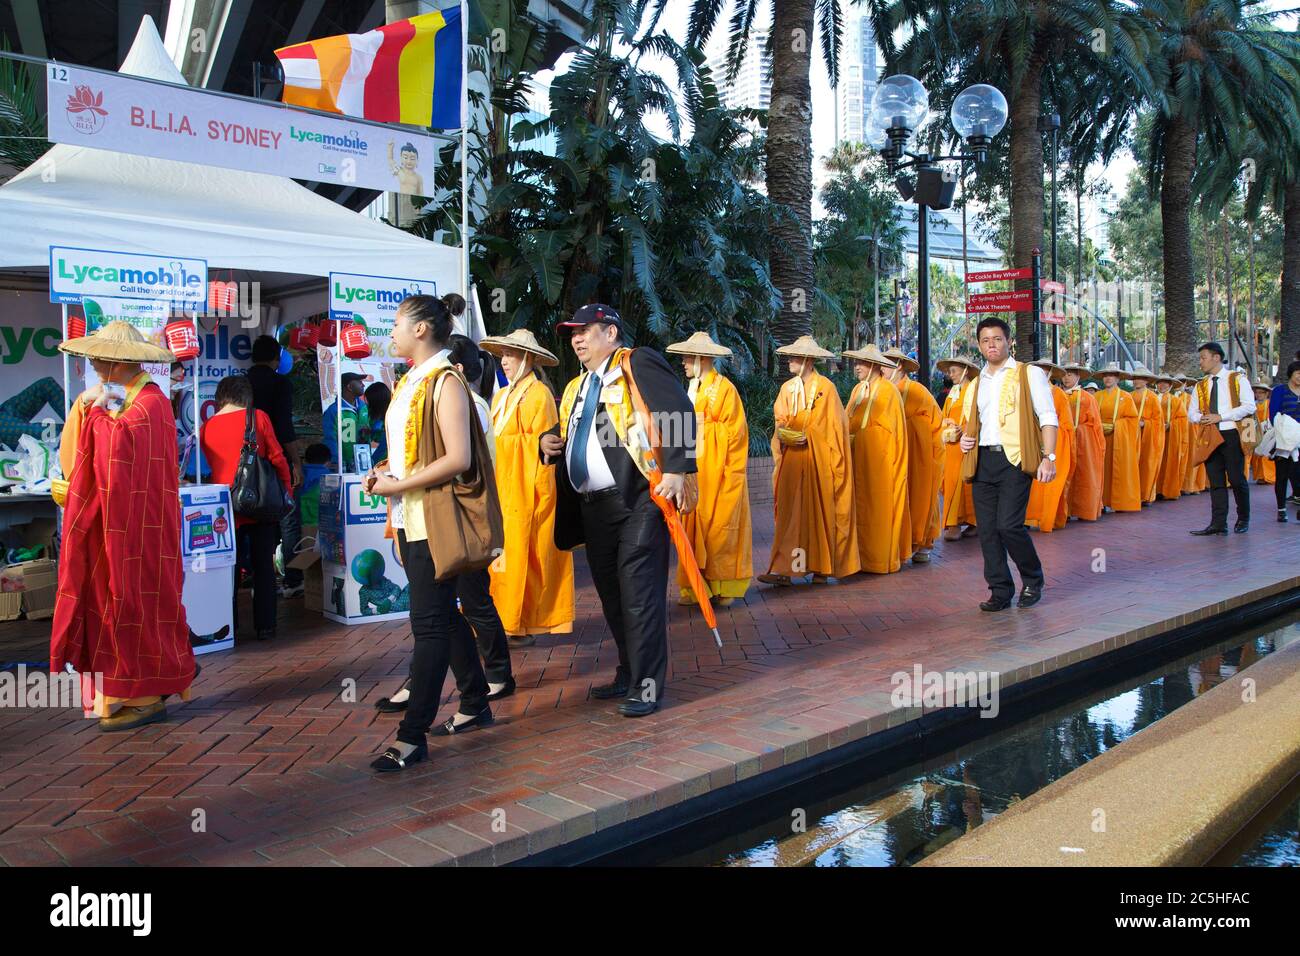 Almosen runden das Buddha’s Birthday Festival in Darling Harbour, Sydney, Australien ab. Stockfoto